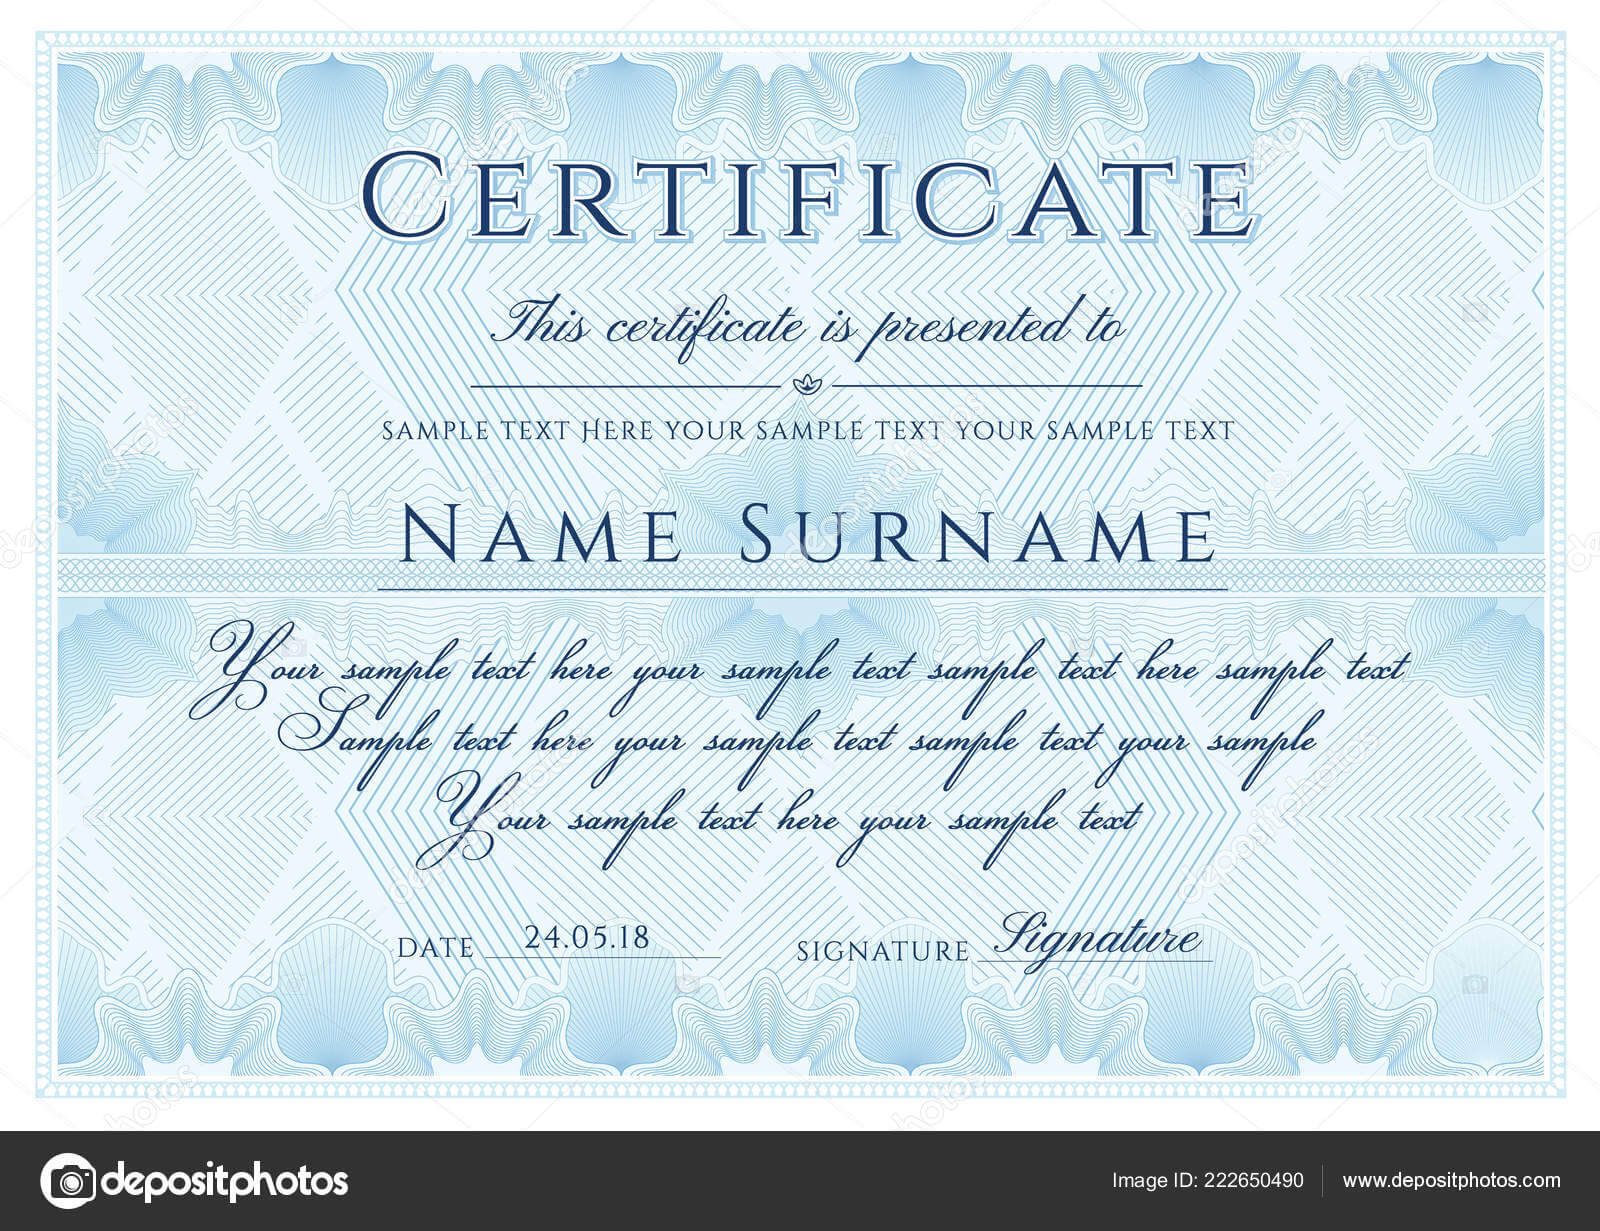 Formal Certificate Template | Certificate Template Formal Pertaining To Formal Certificate Of Appreciation Template